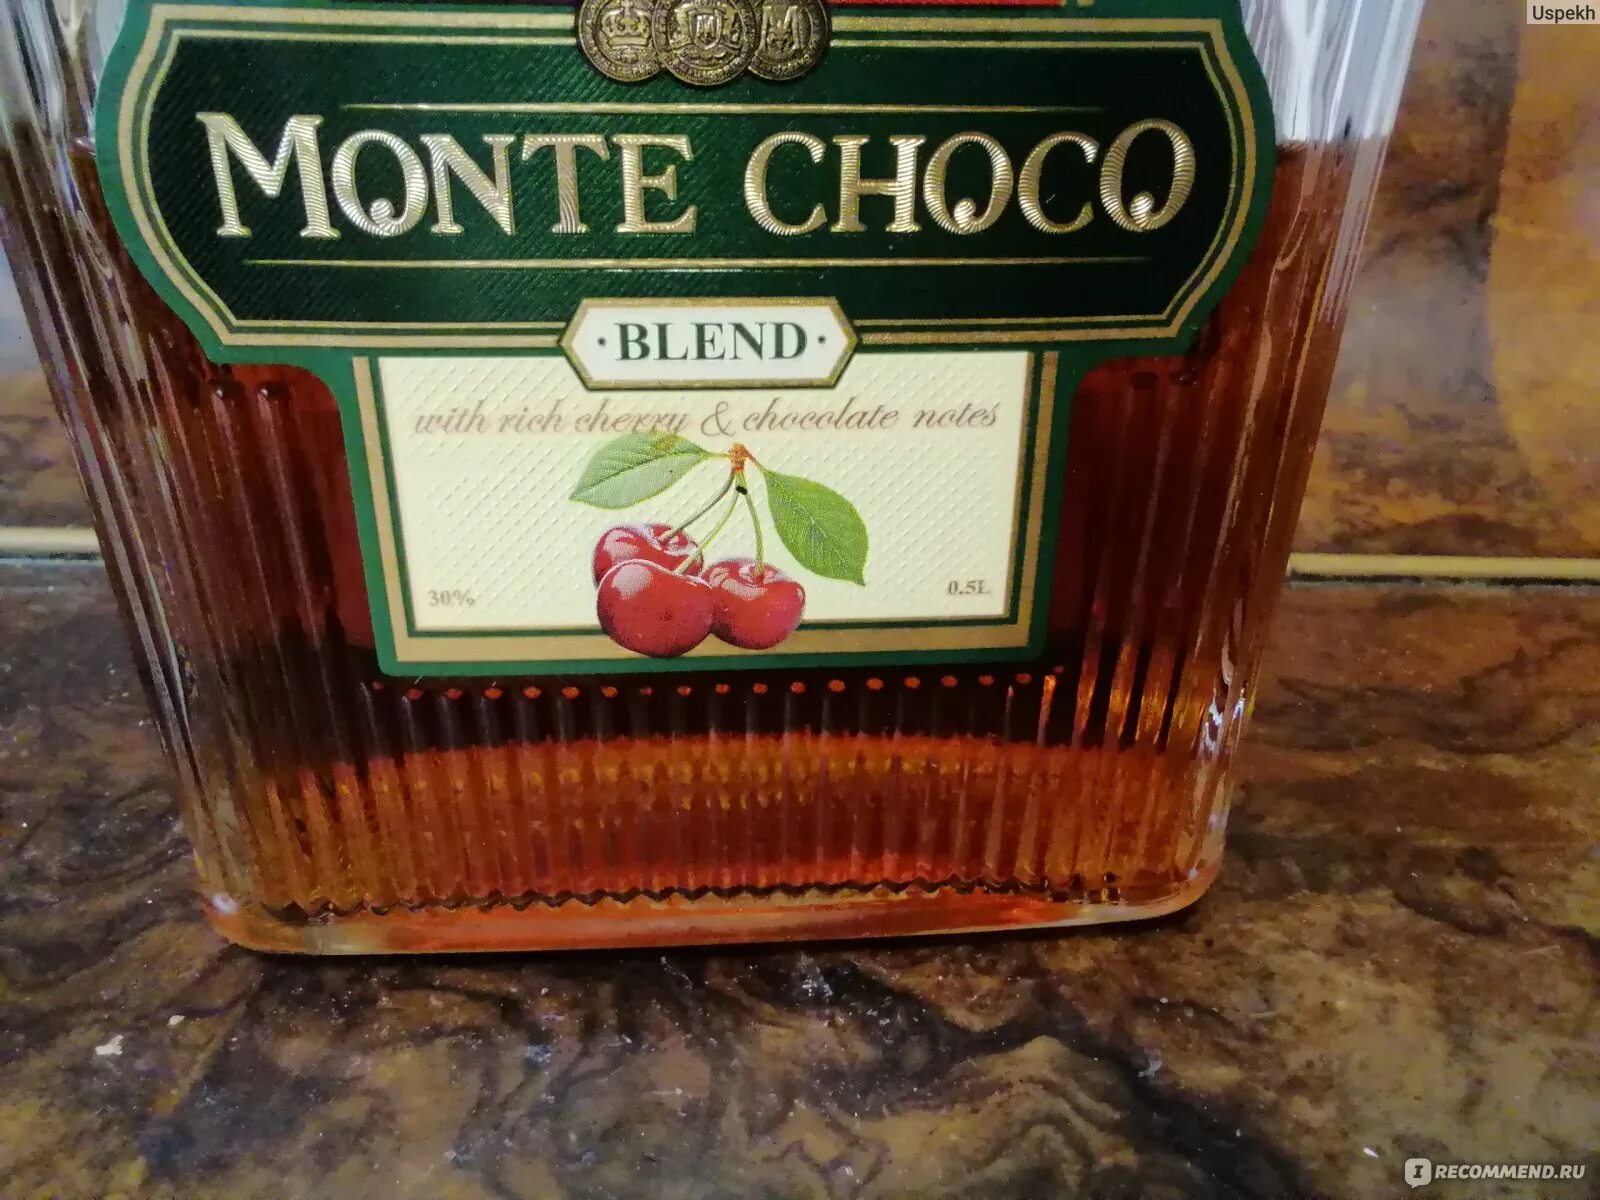 Коктейль monte choco. Монте Чоко коньяк вишня. Монте Чоко Blend. Монте шоко вишня. Коктейль Монте Чоко.